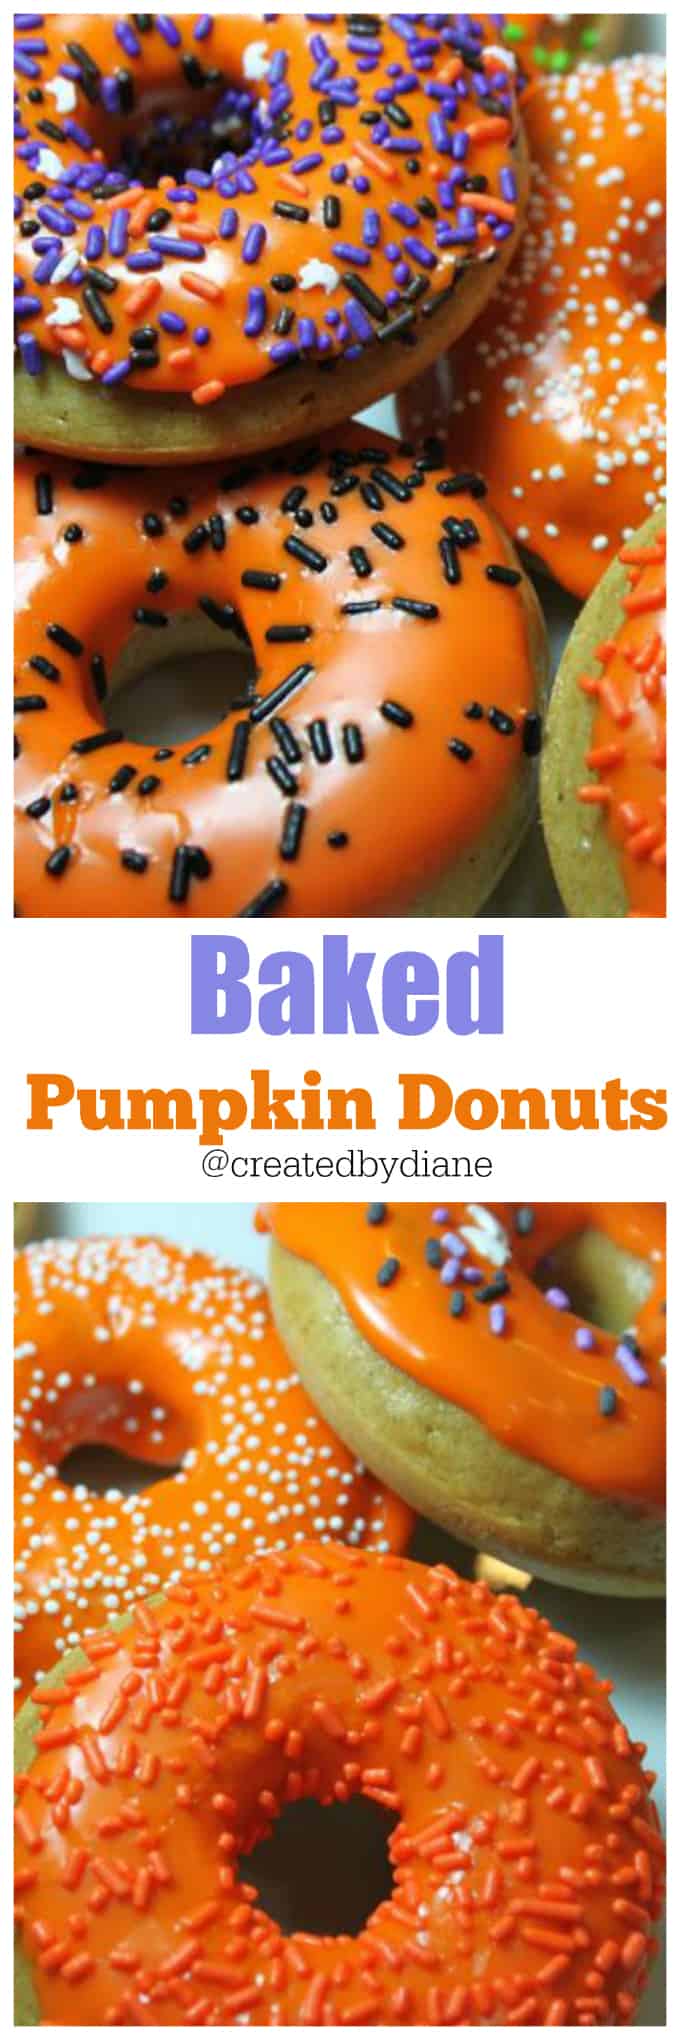 baked pumpkin donut recipe @createdbydiane